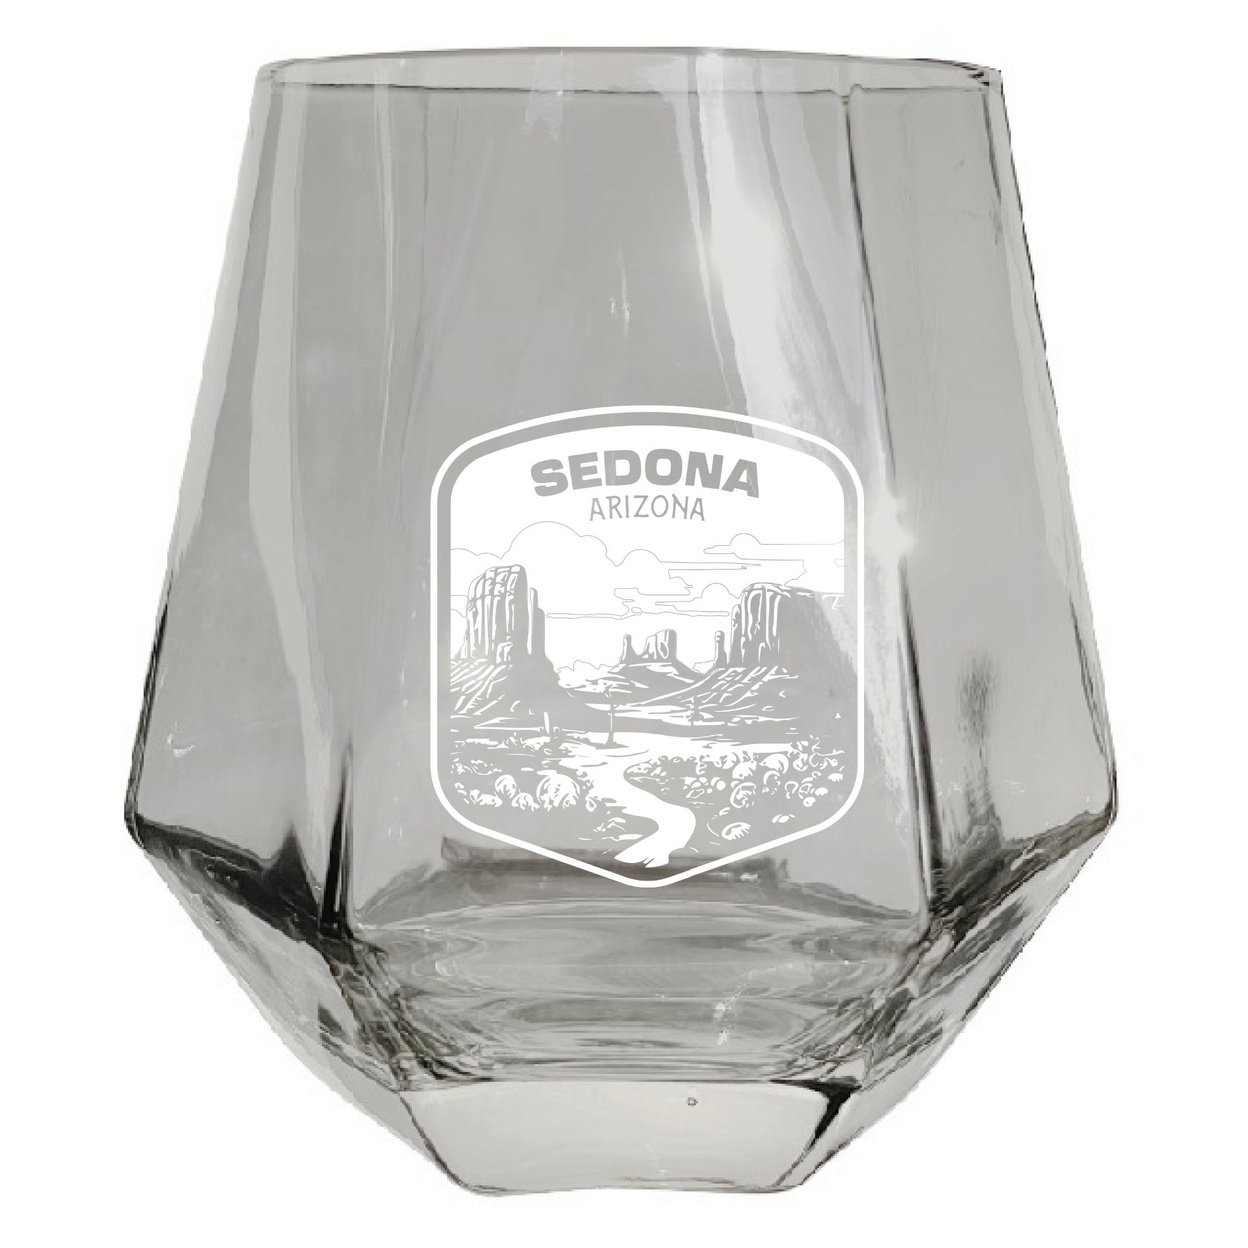 Sedona Arizona Souvenir Wine Glass EngravedDiamond 15 Oz Clear Iridescent - Gray,,2-Pack